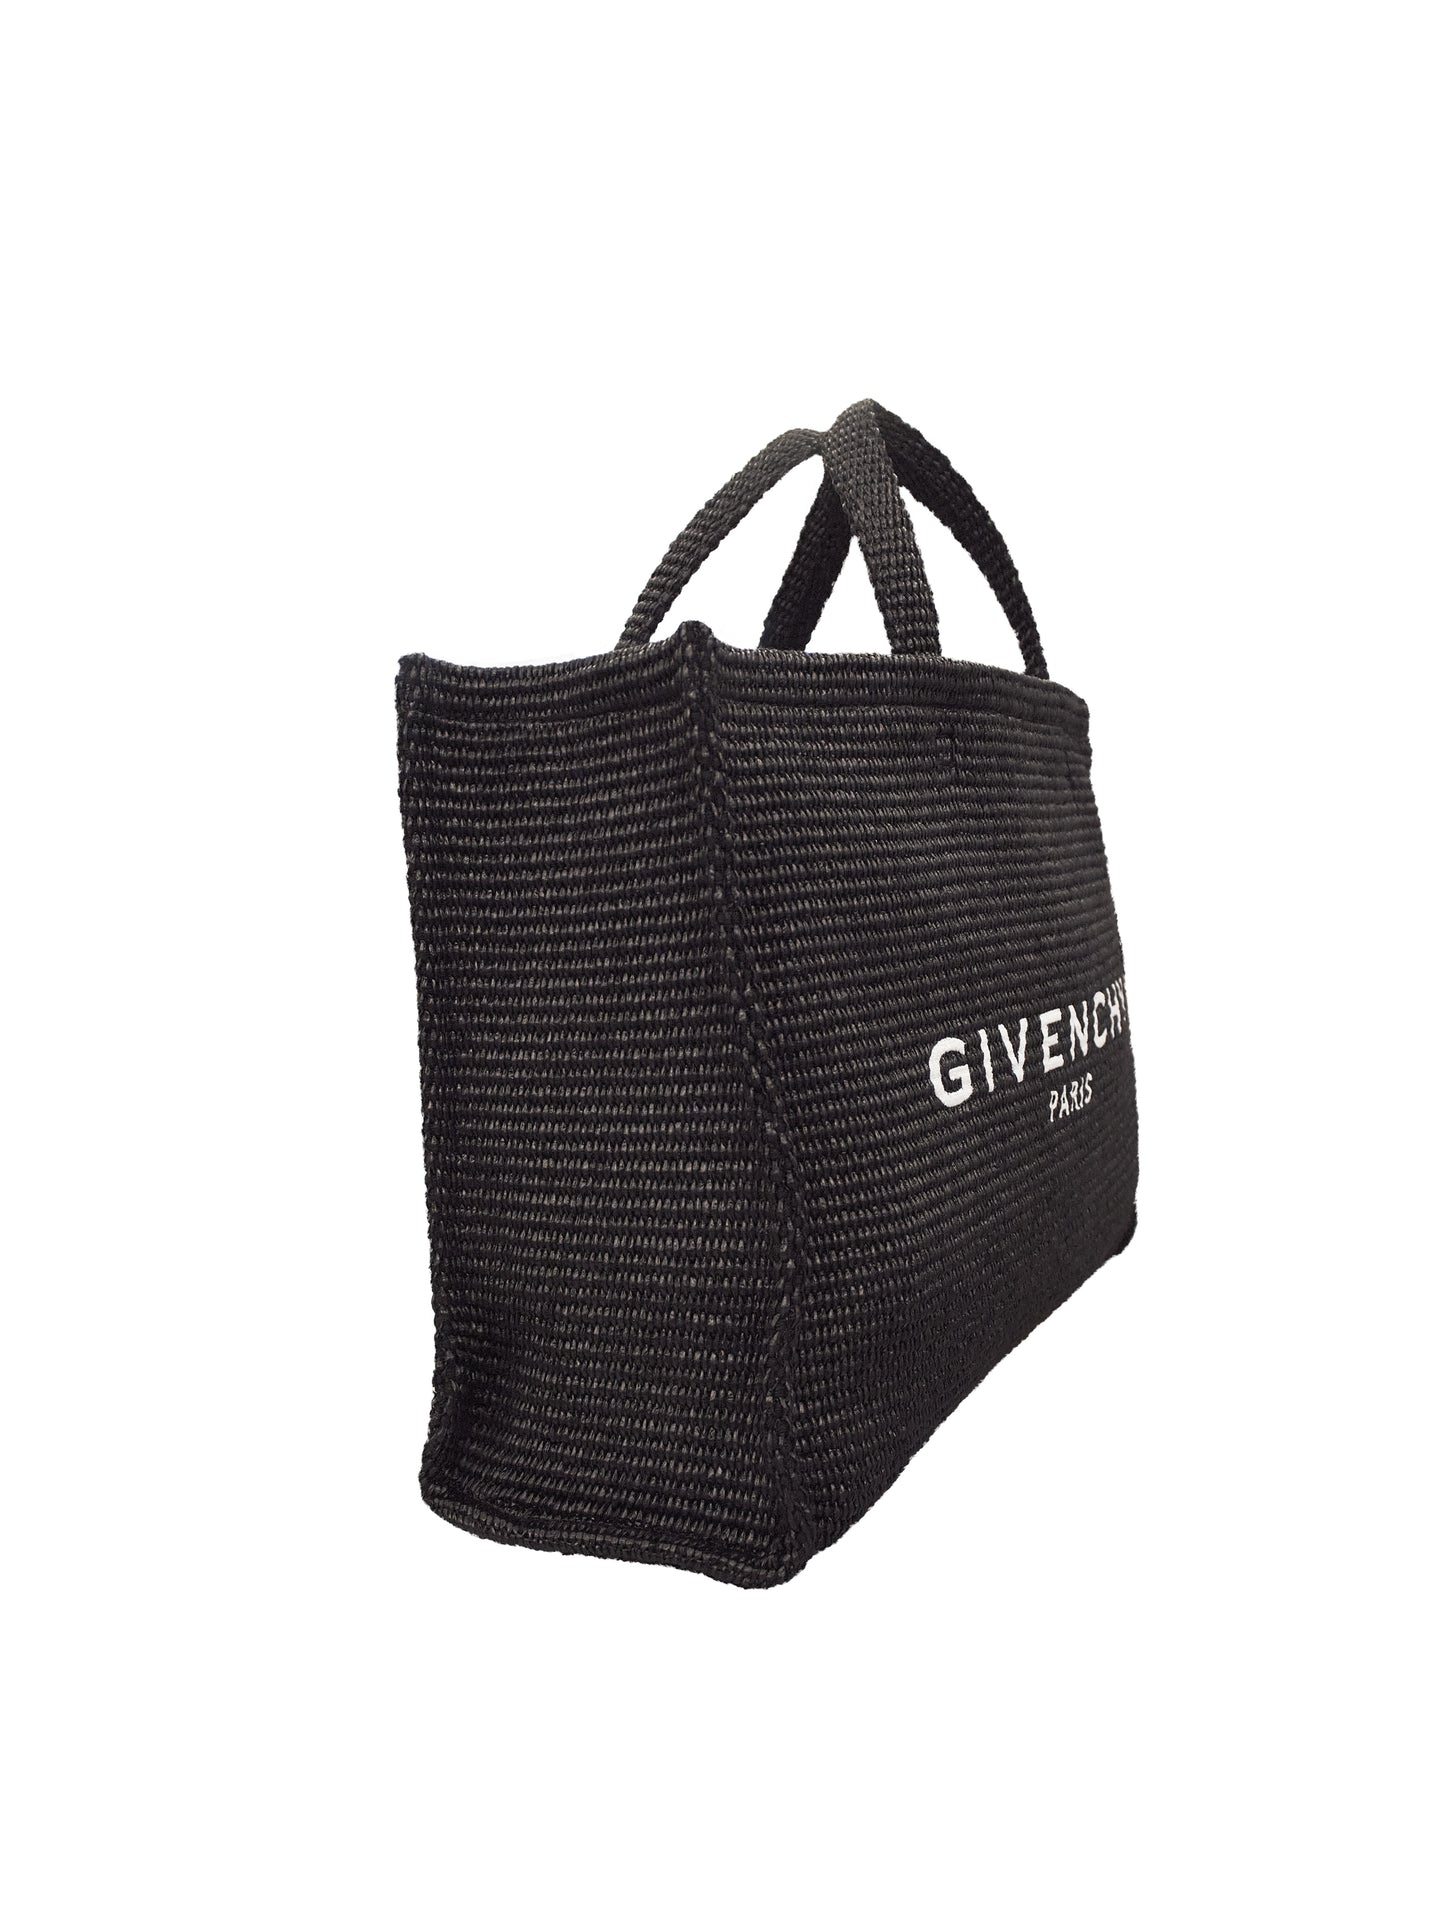 Givenchy Tasche Large G-Tote Schwarz